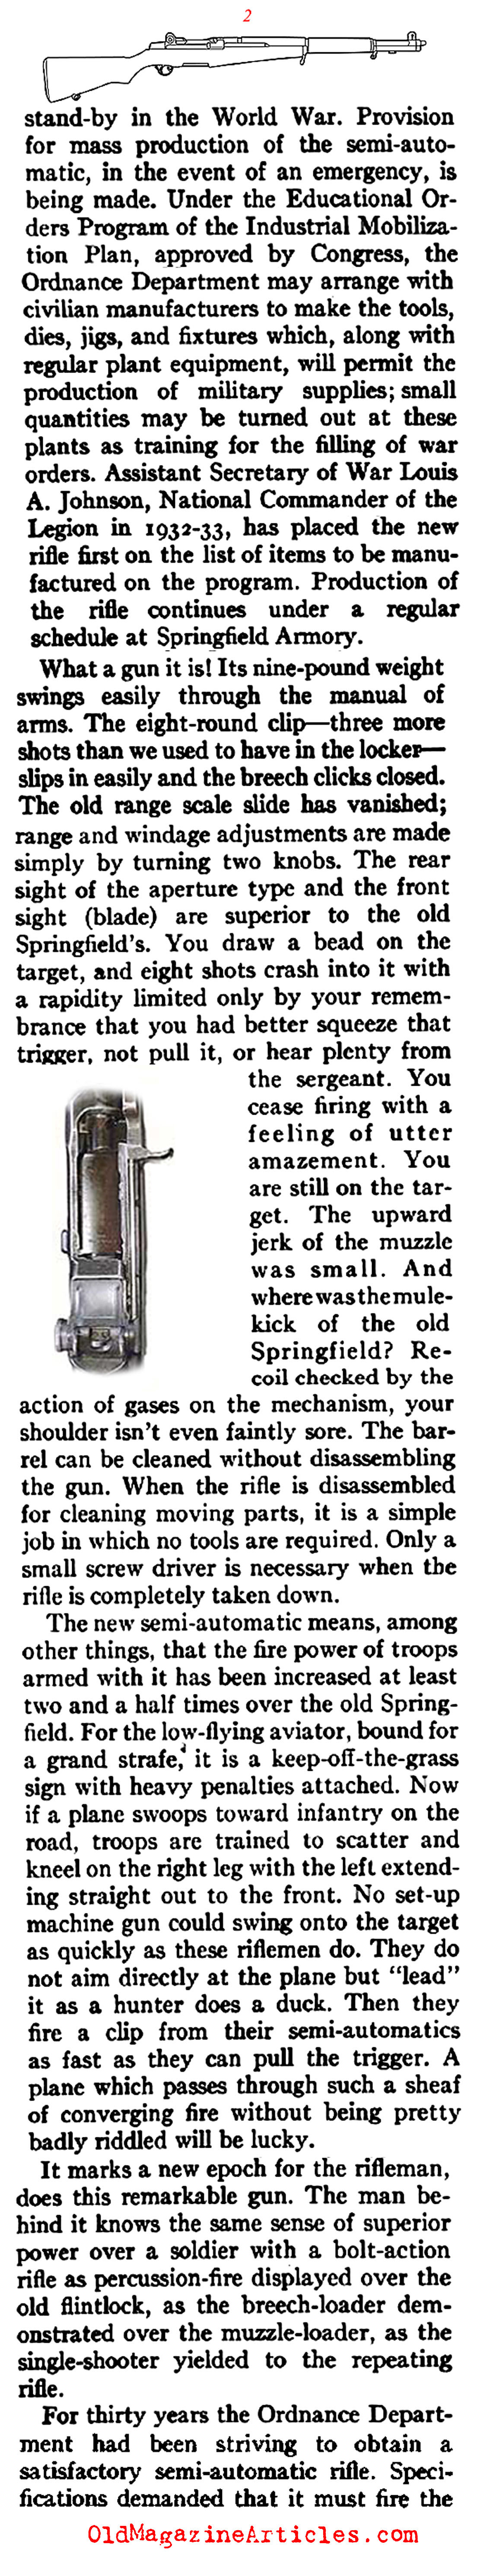 The Birth of the M-1 Garand Rifle (American Legion Magazine, 1939)